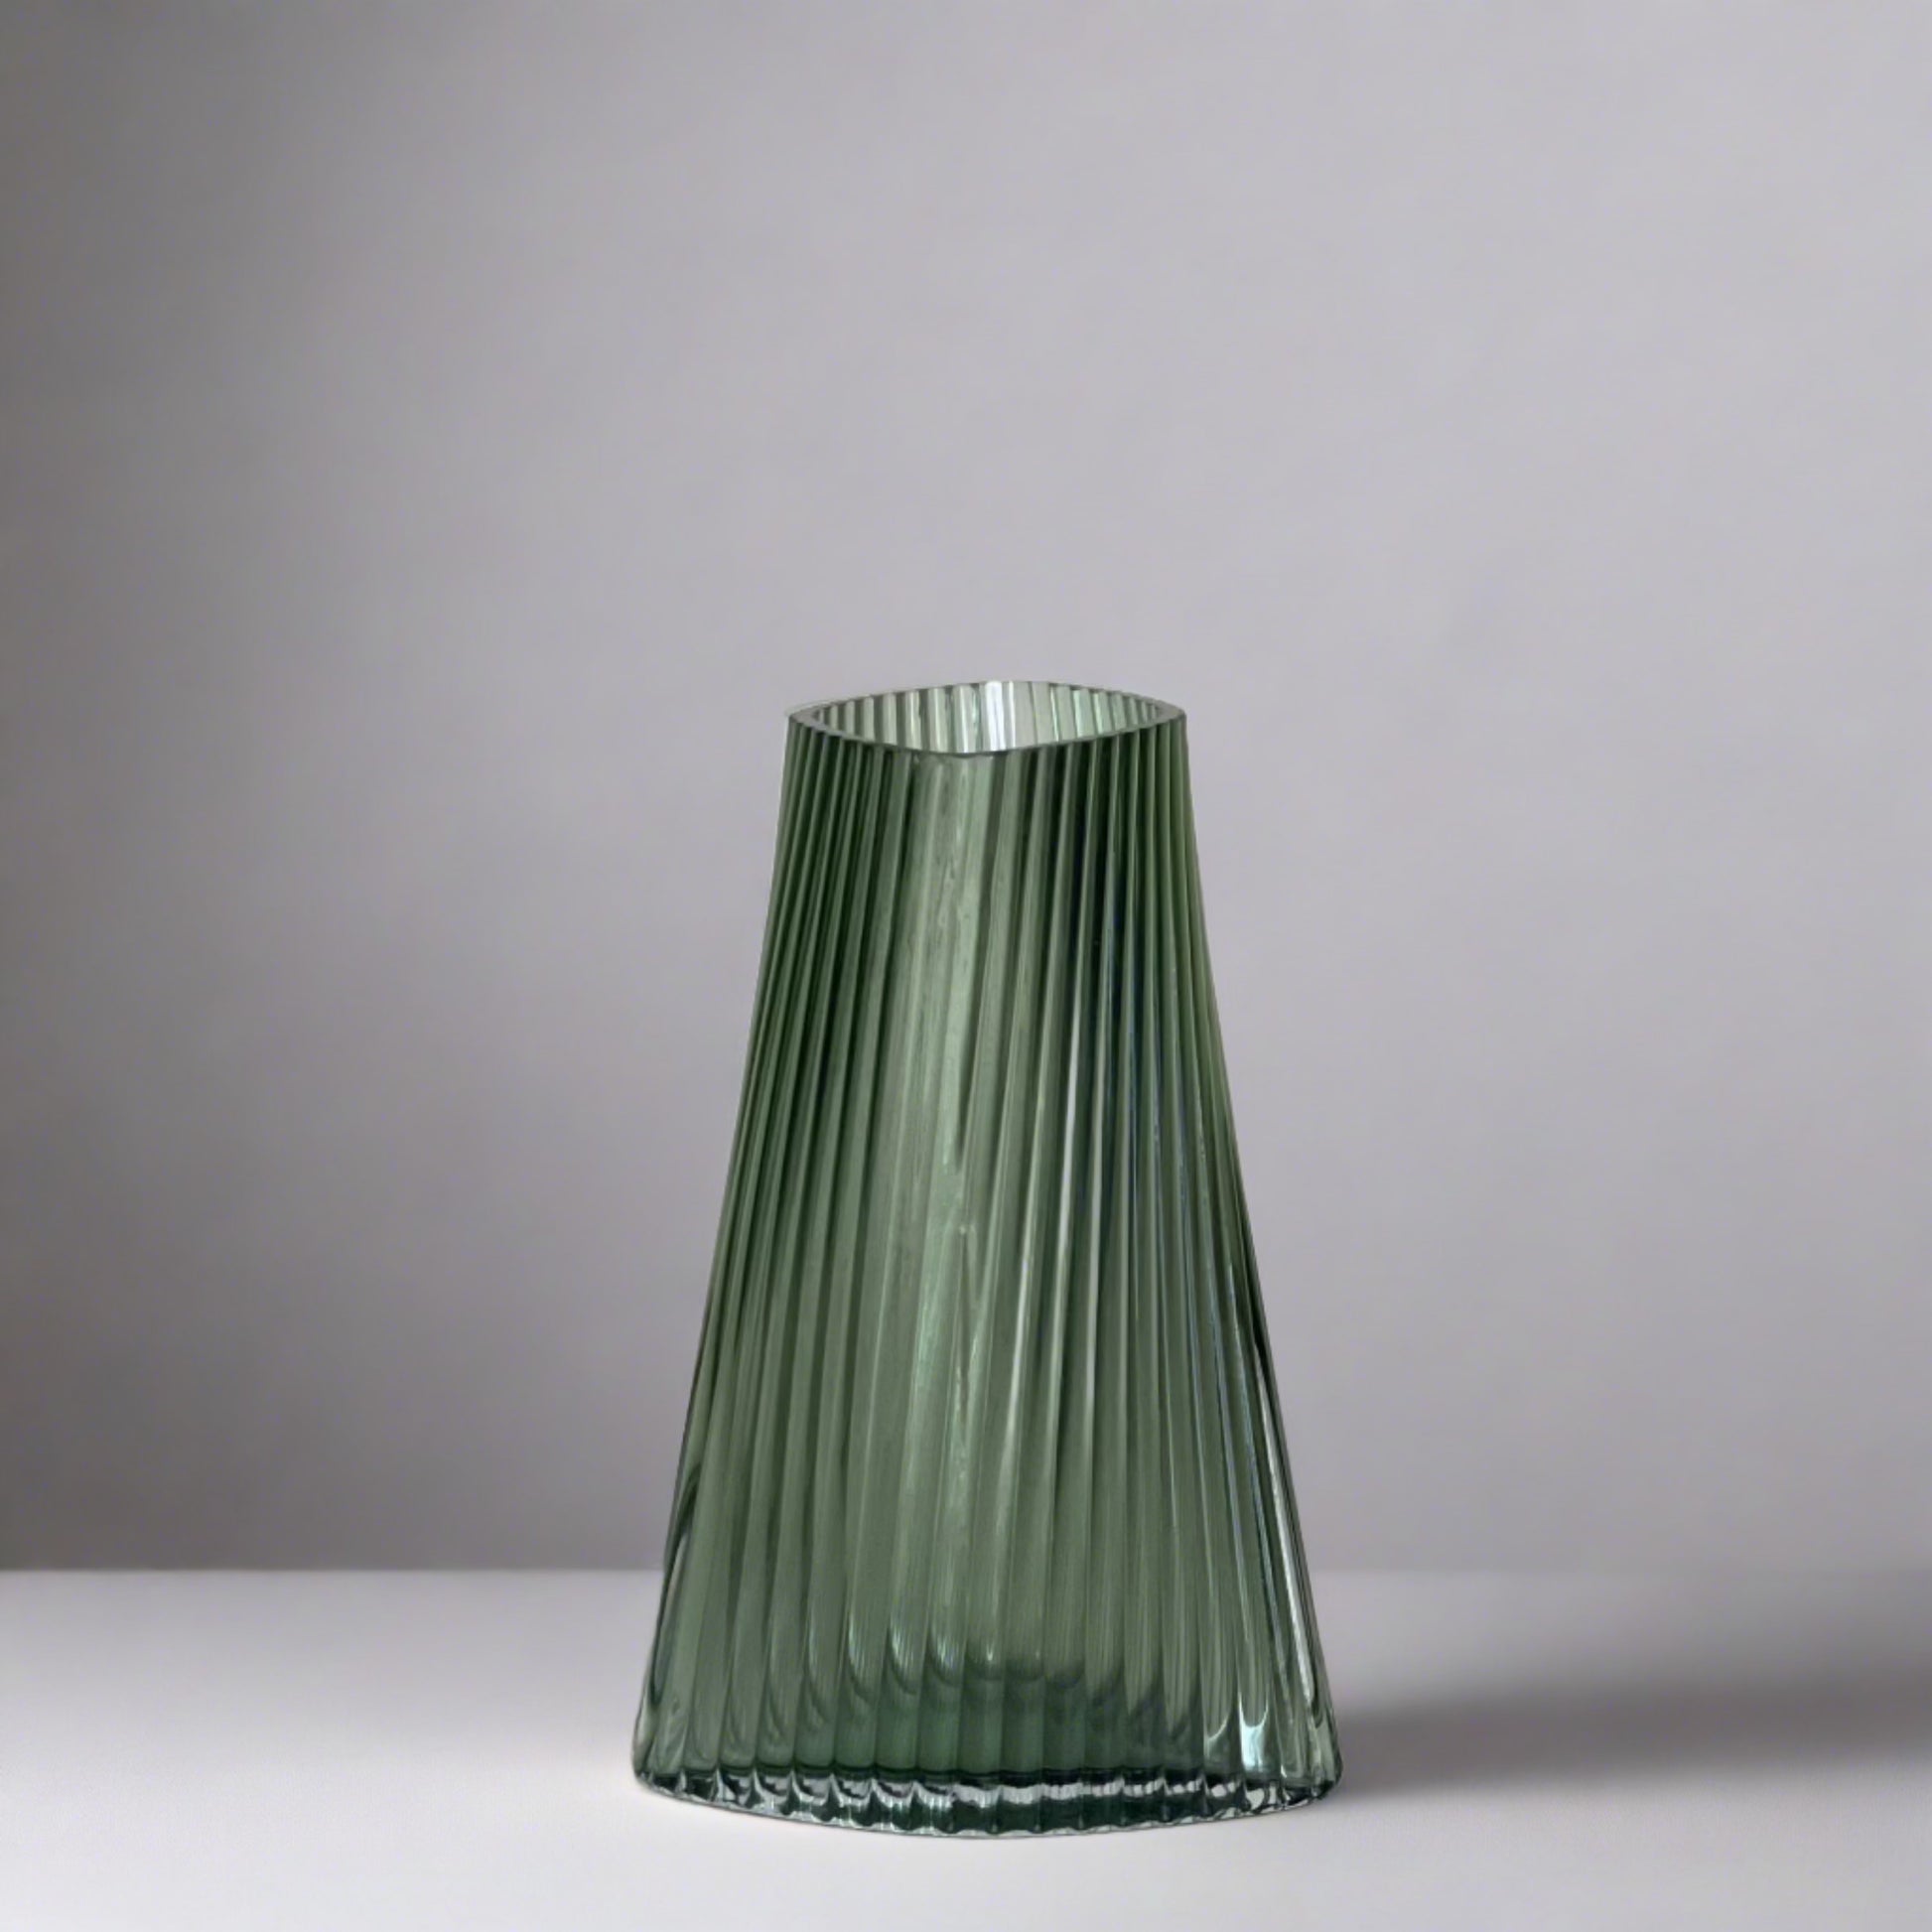 Mangata Green vase (Small)